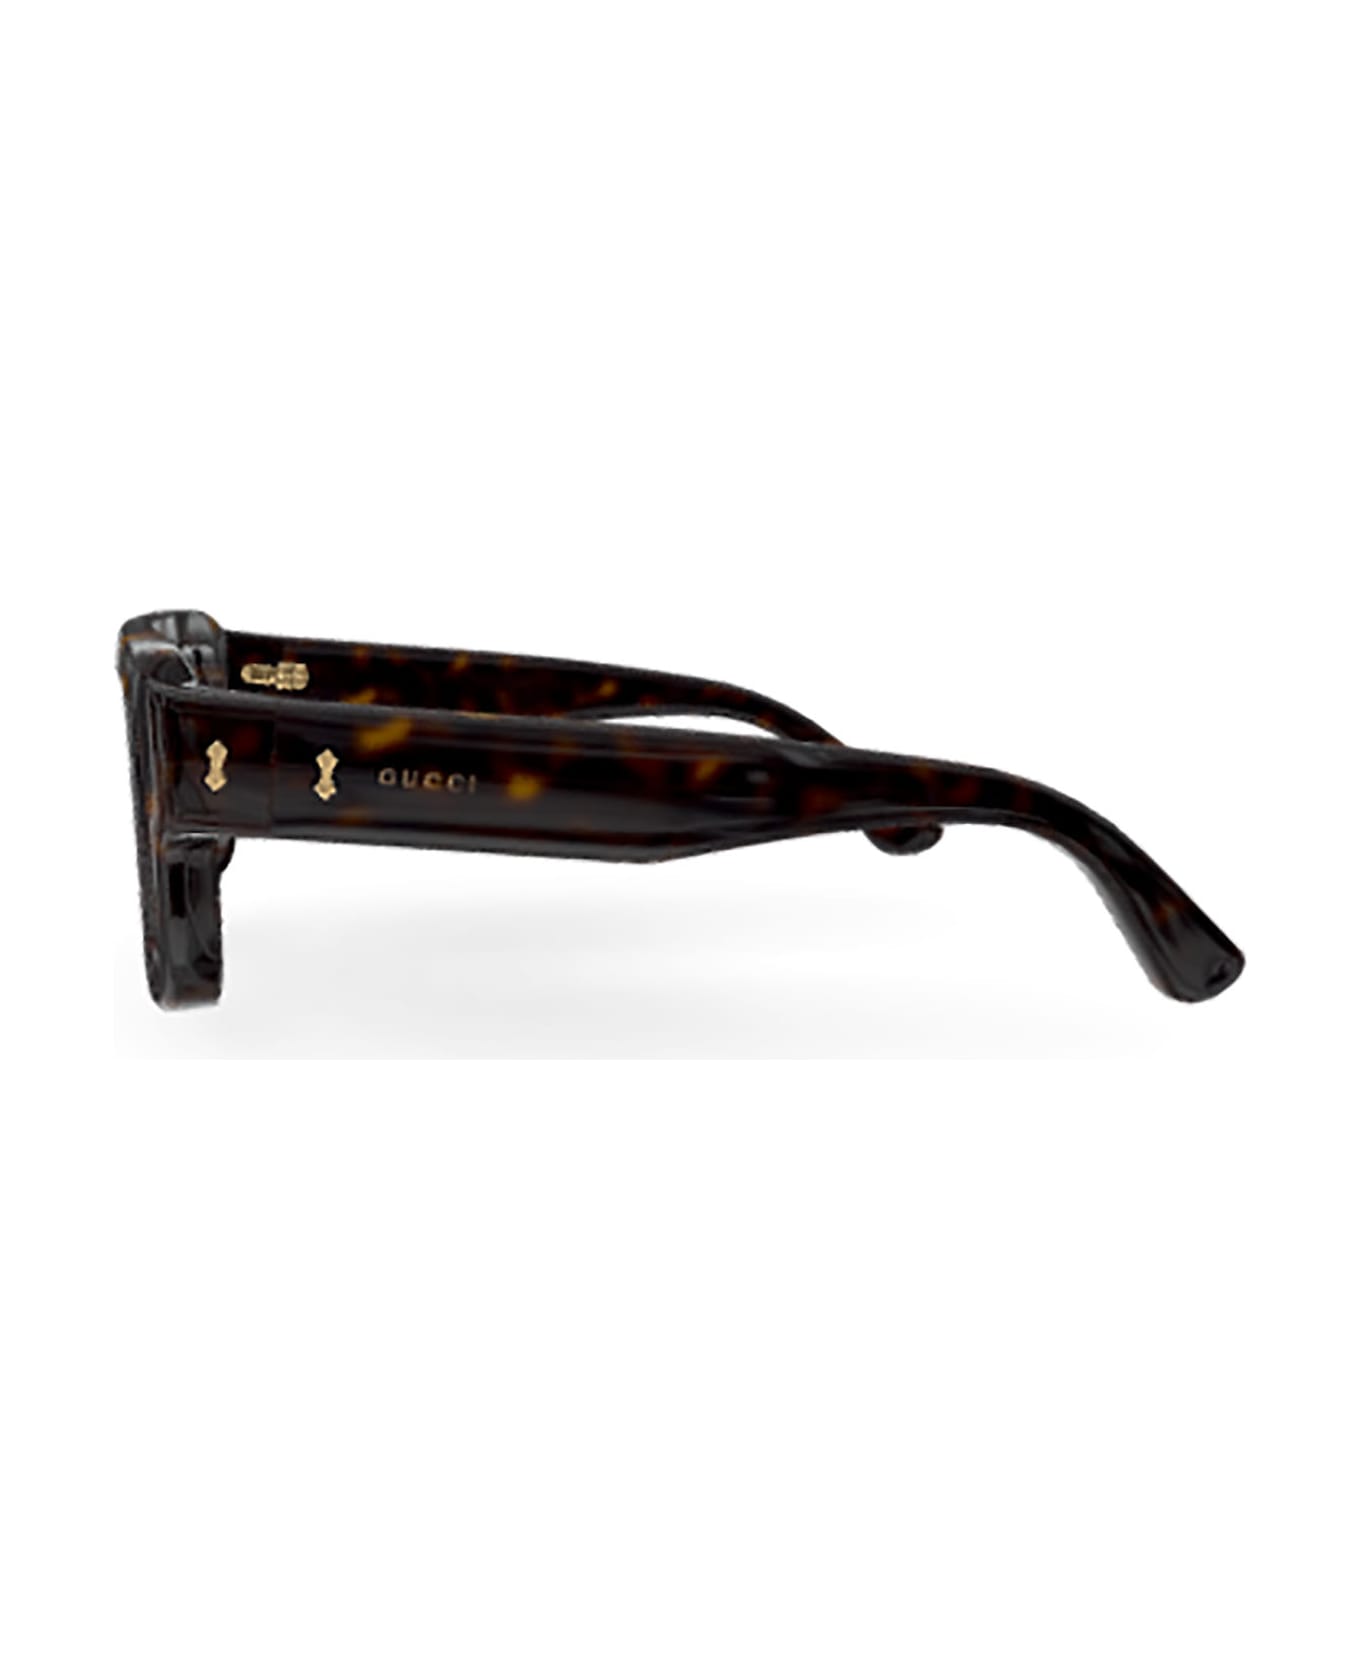 Gucci Eyewear GG1461S Sunglasses - Havana Havana Brown